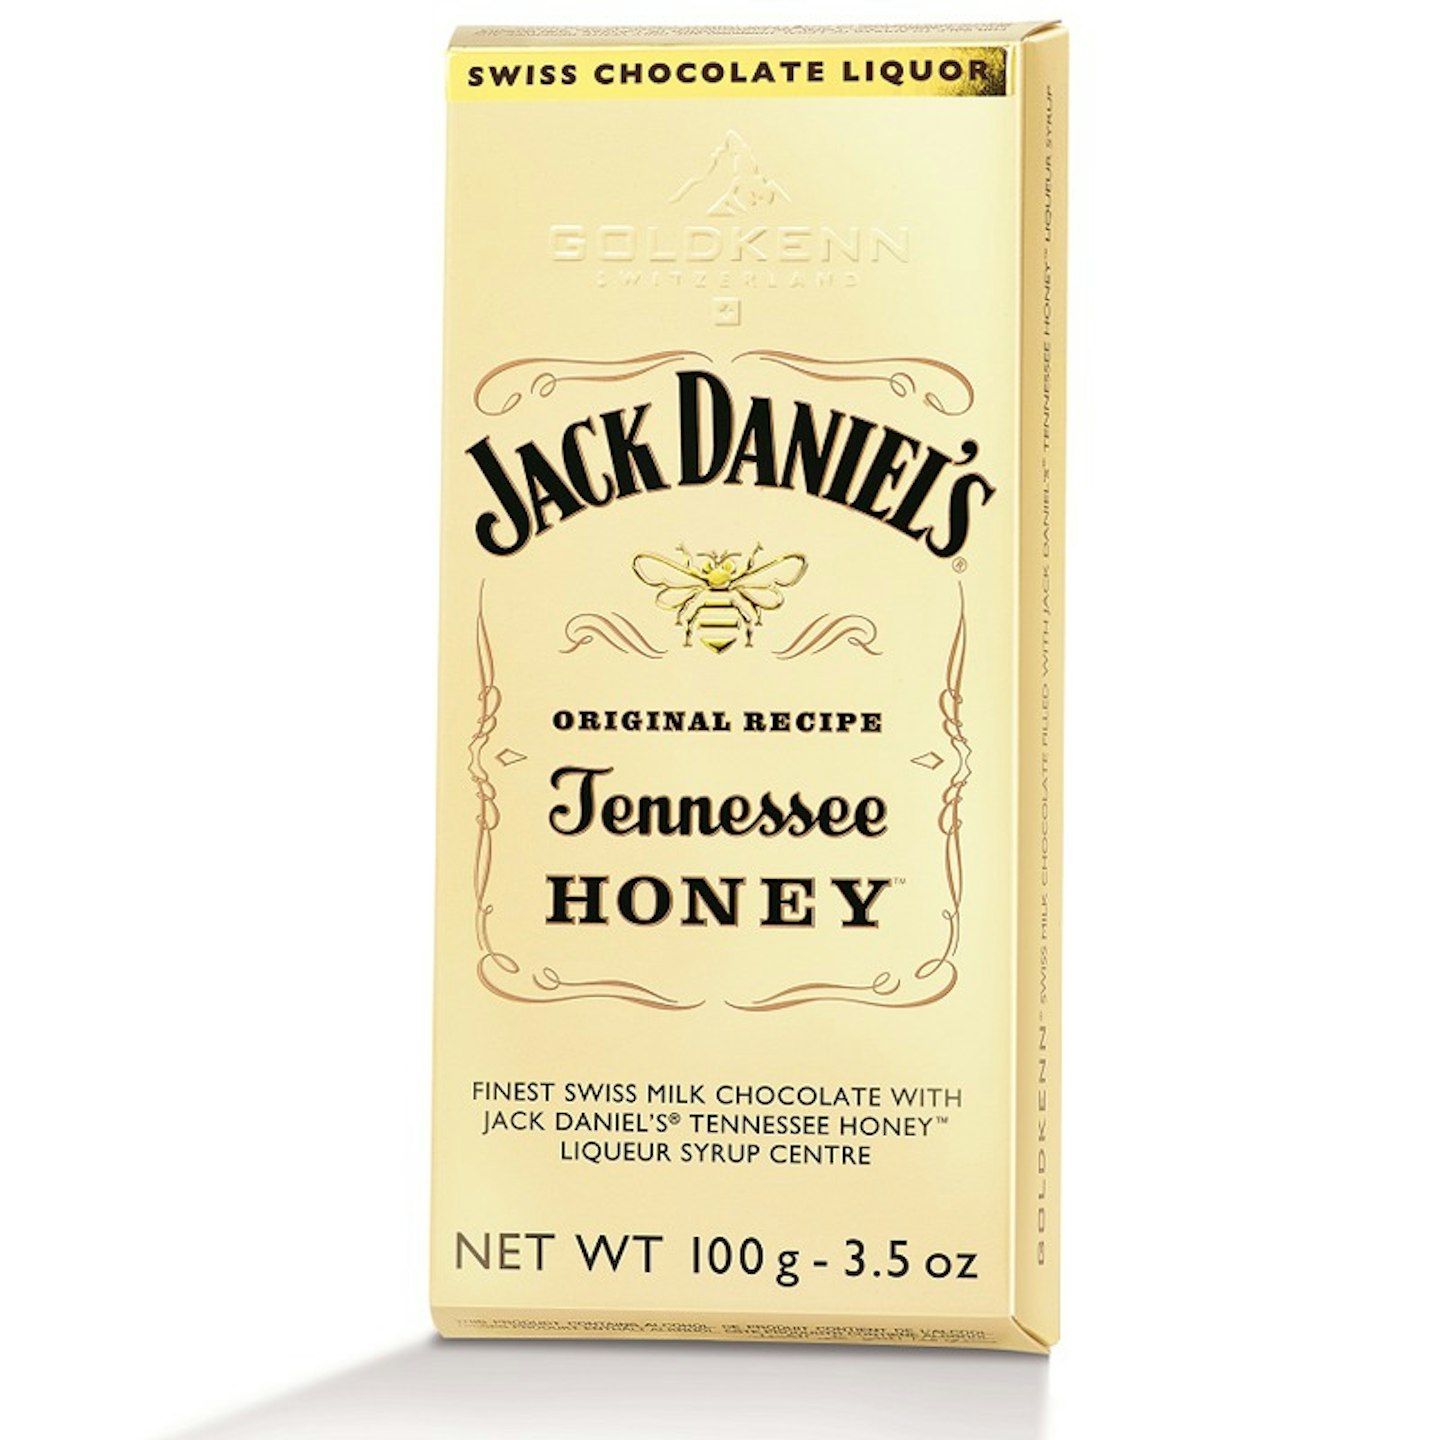 Jack Danielu2019s Honey Liquor Bar 100g, 4